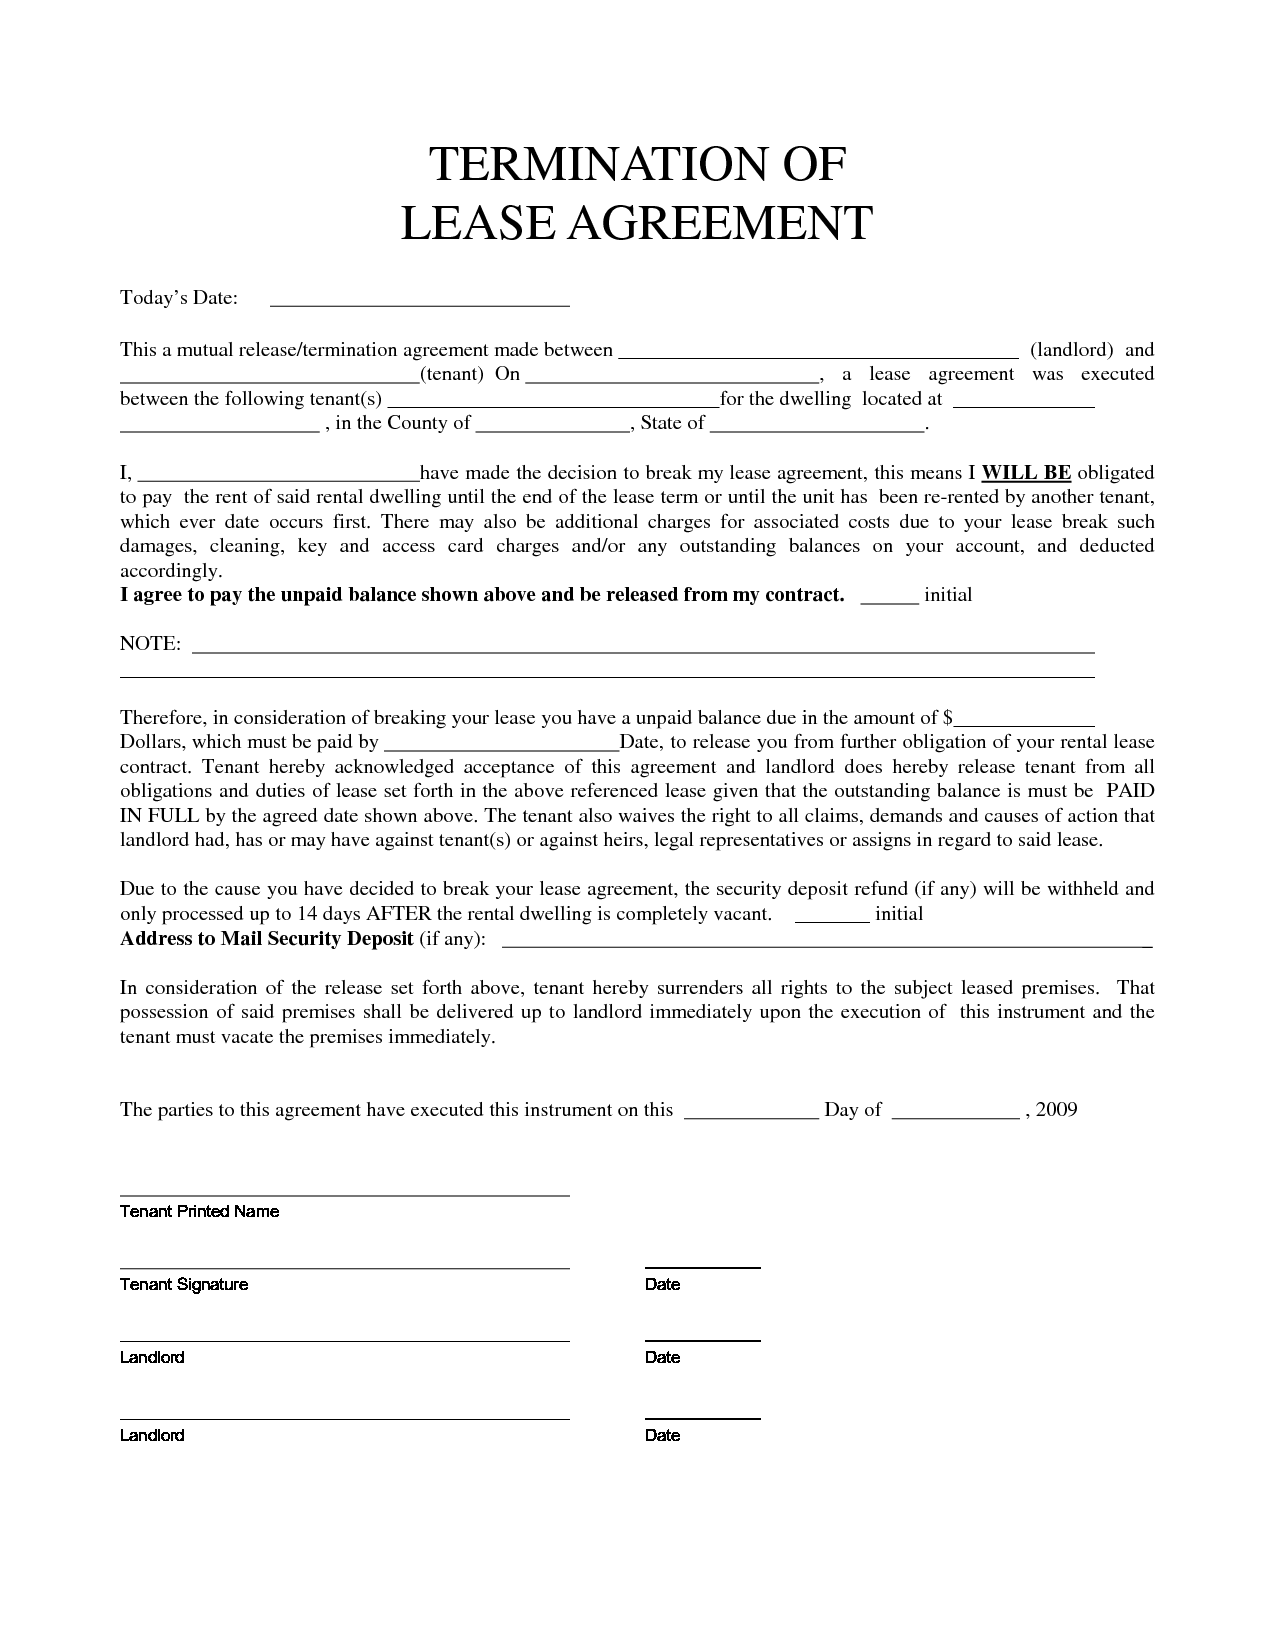 Cancellation Lease Agreement Filename – elsik blue cetane